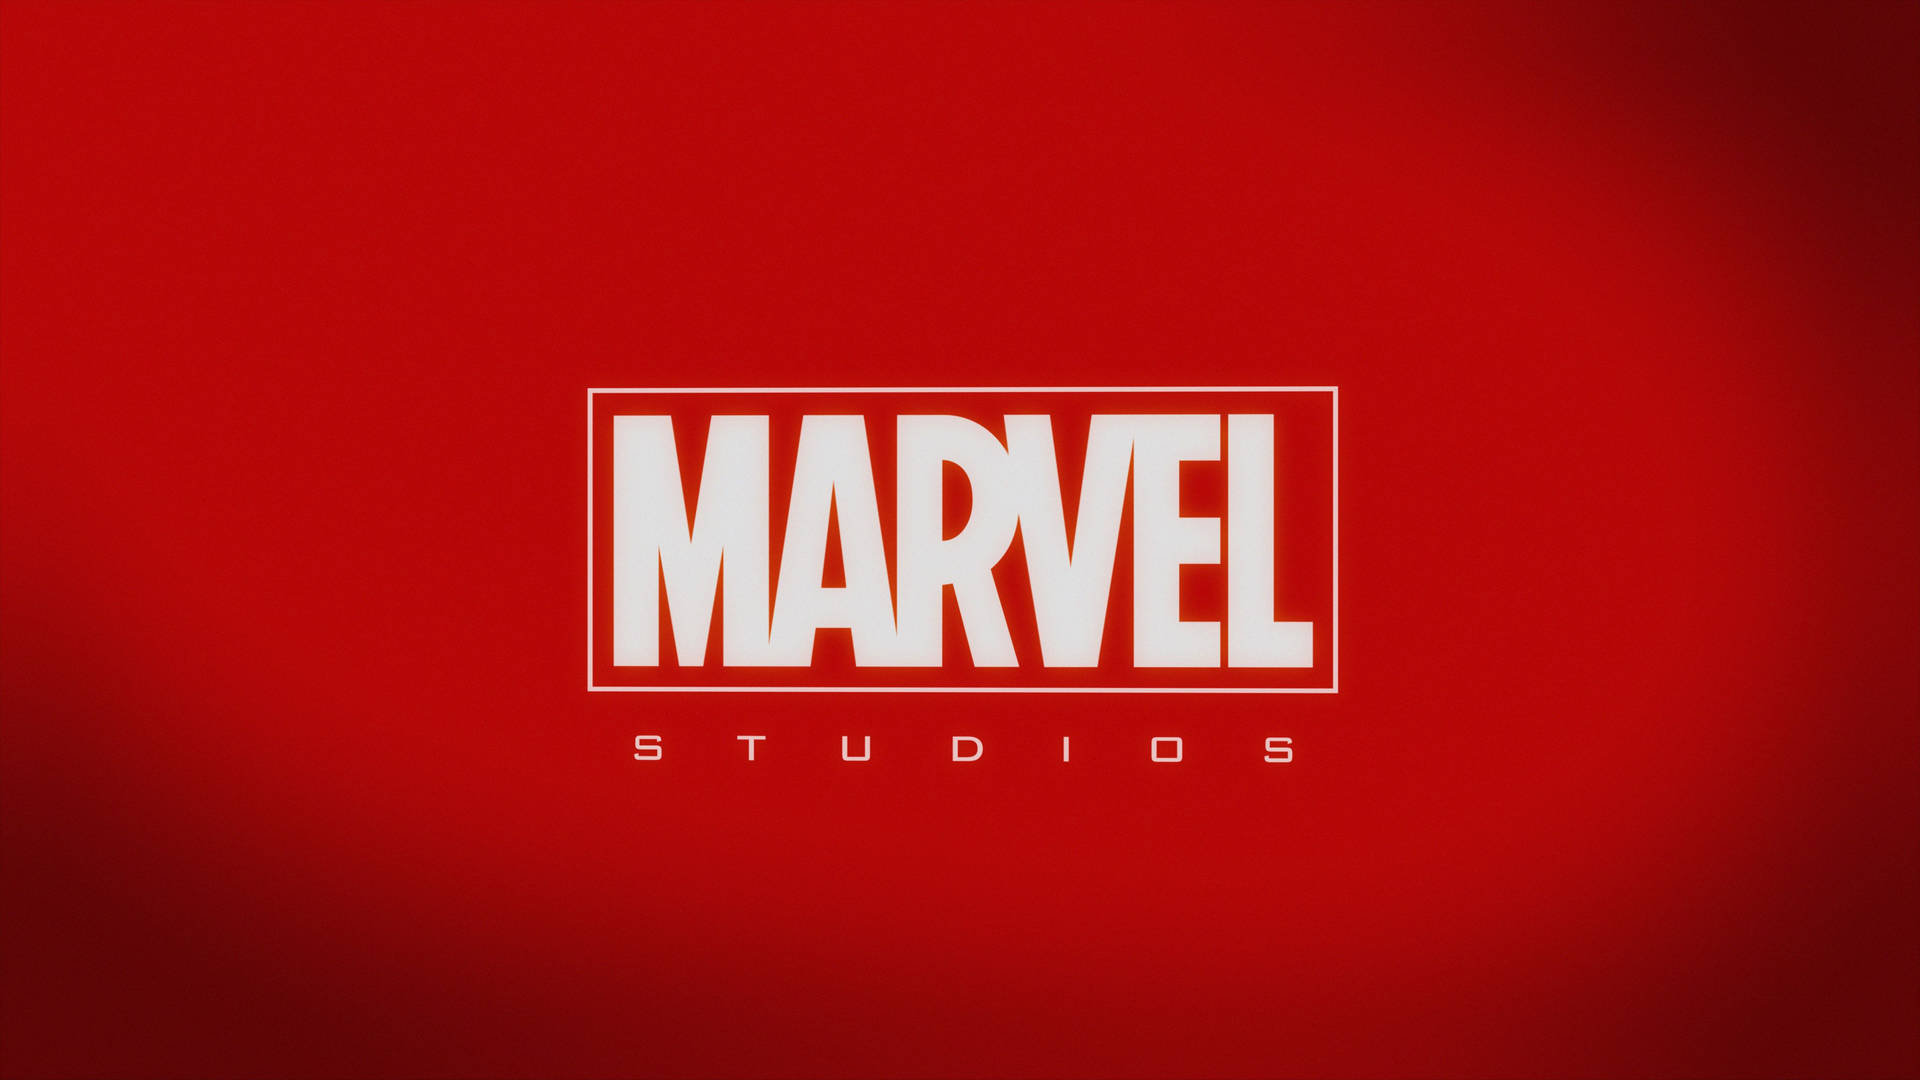 Marvel Studios Background